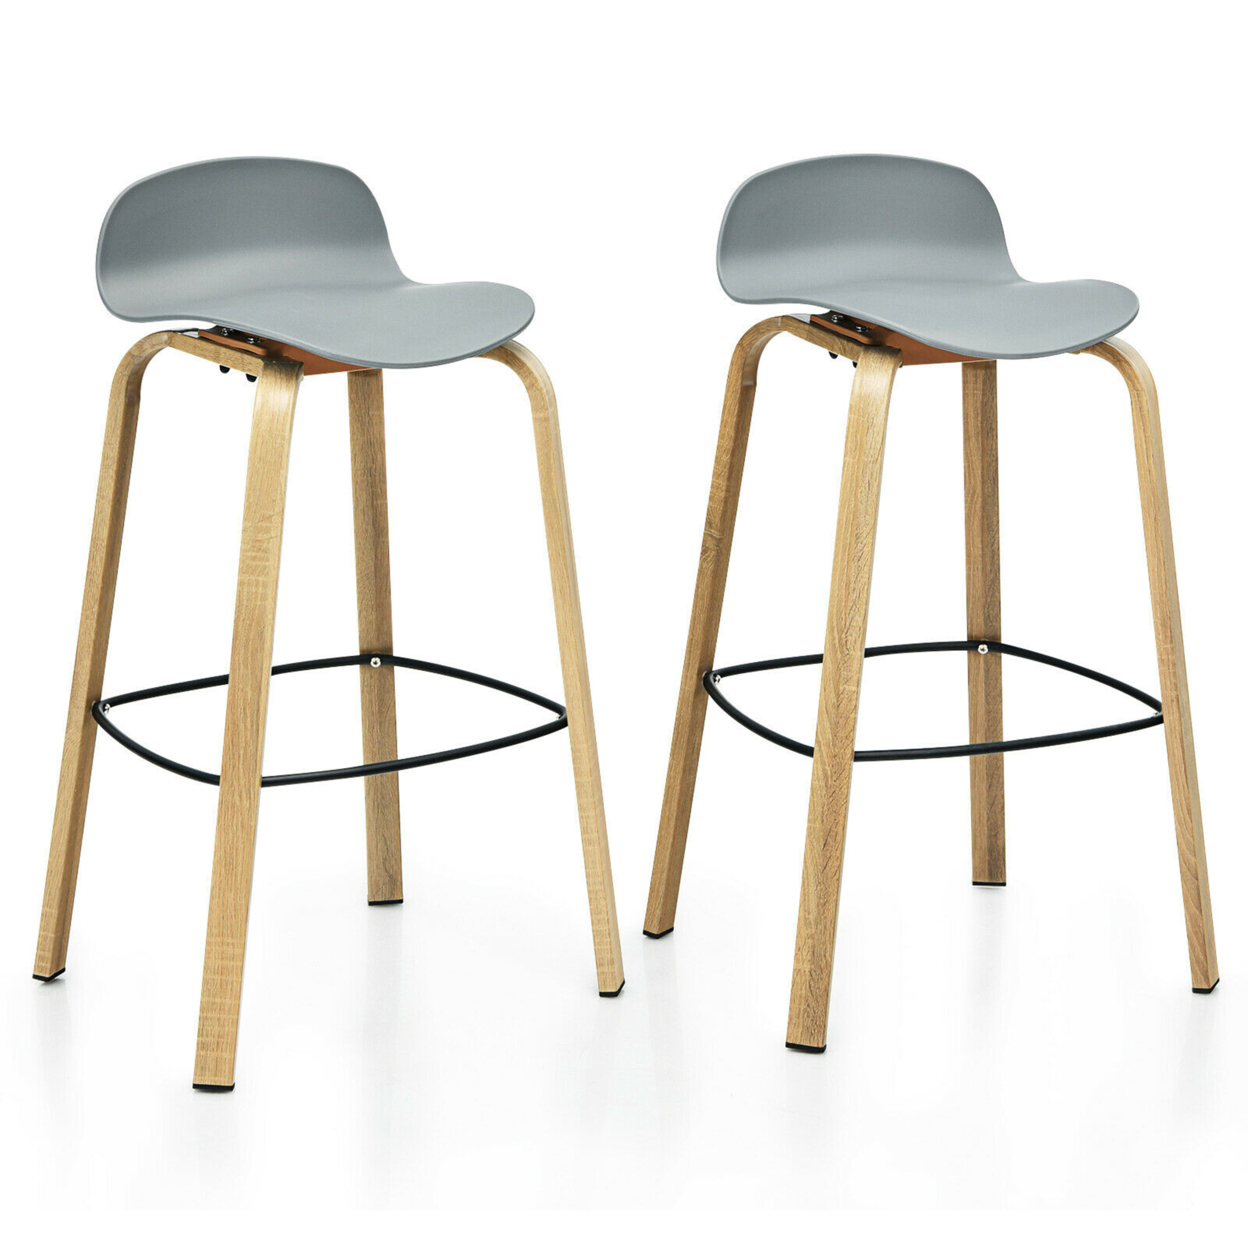 Modern Set Of 2 Barstools 30inch Pub Chairs W/Low Back & Metal Legs Grey